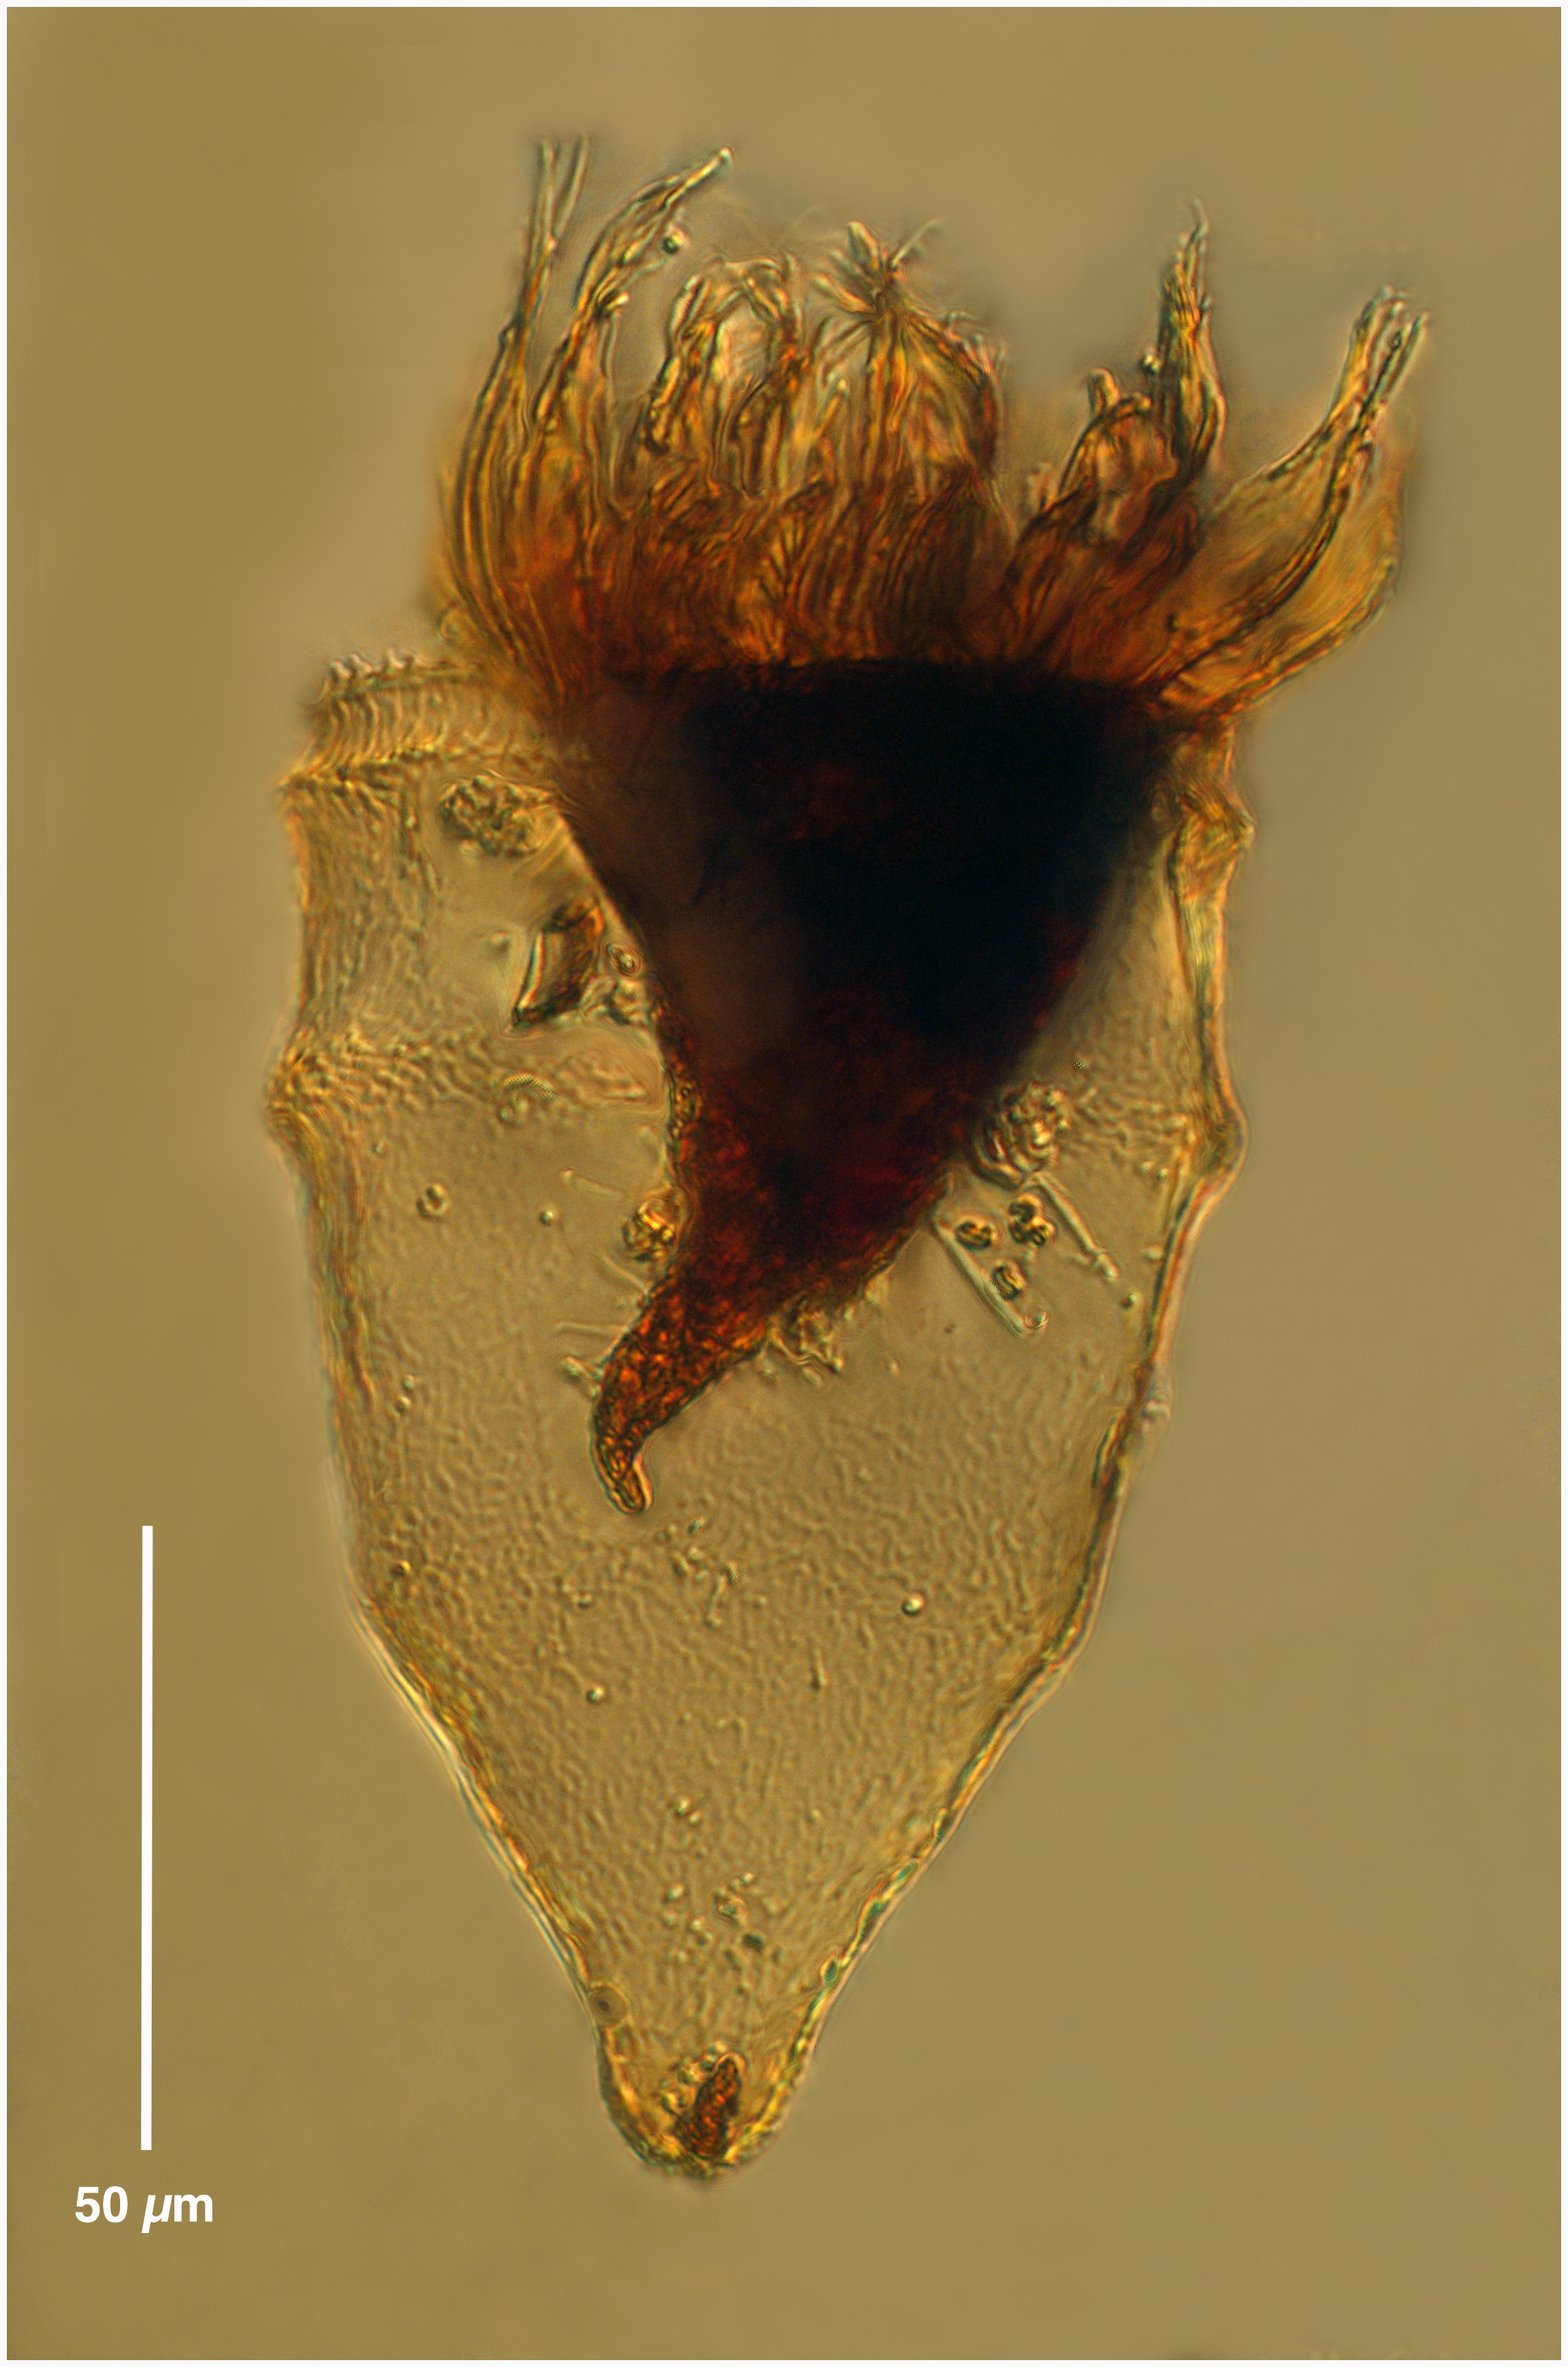 Ptychocylis obtusa (elongate type)